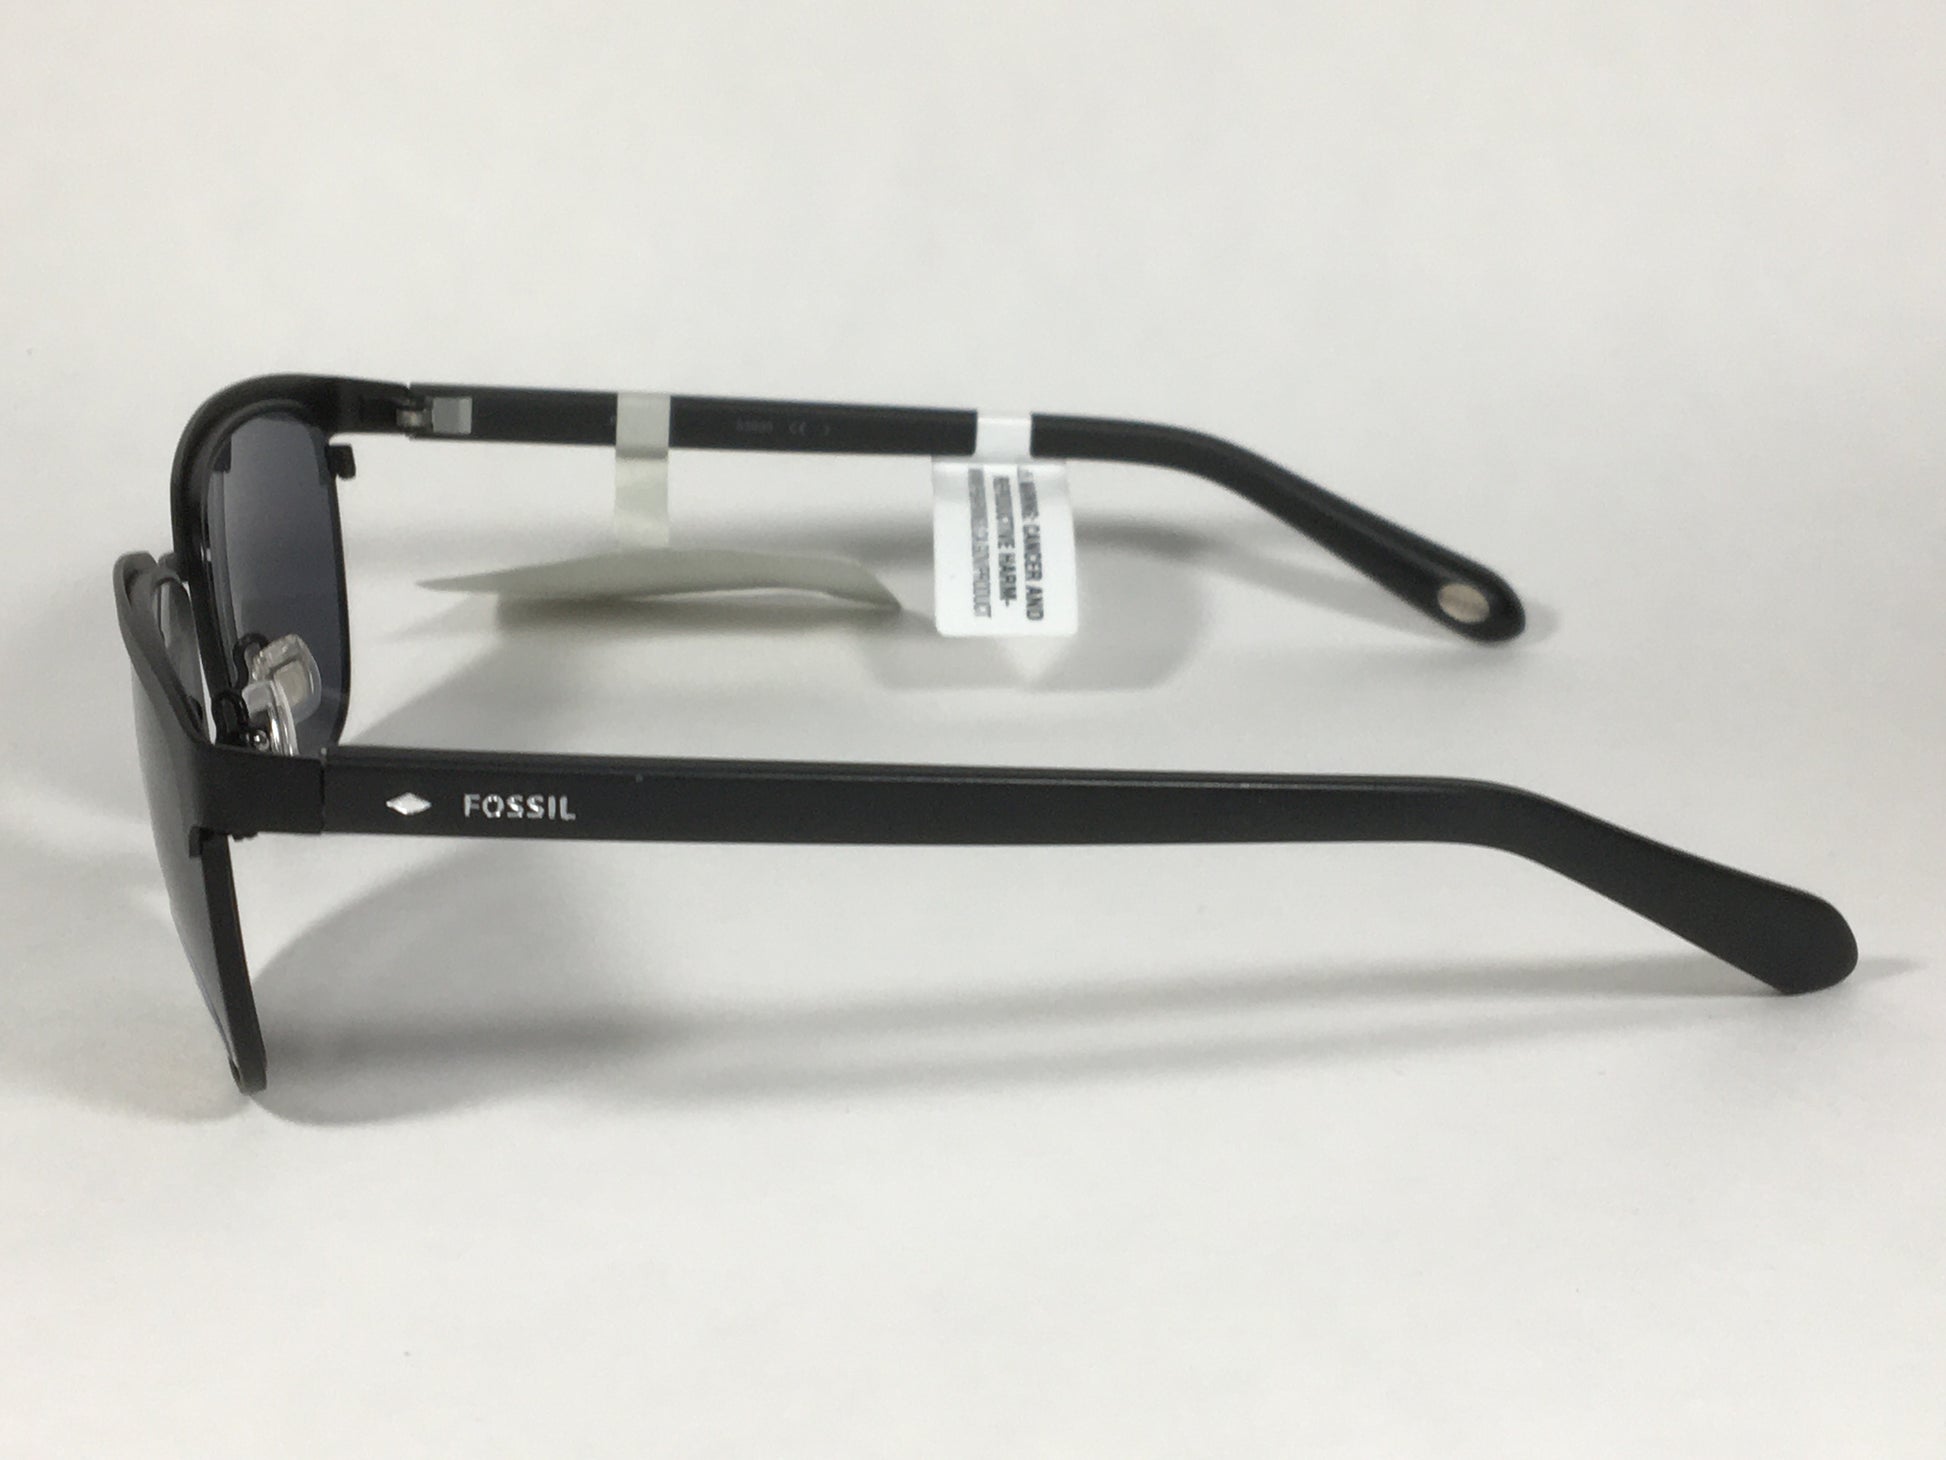 Fossil Club Sunglasses Matte Black Frame Solid Gray Lens FM120 Small Mens 53mm - Sunglasses